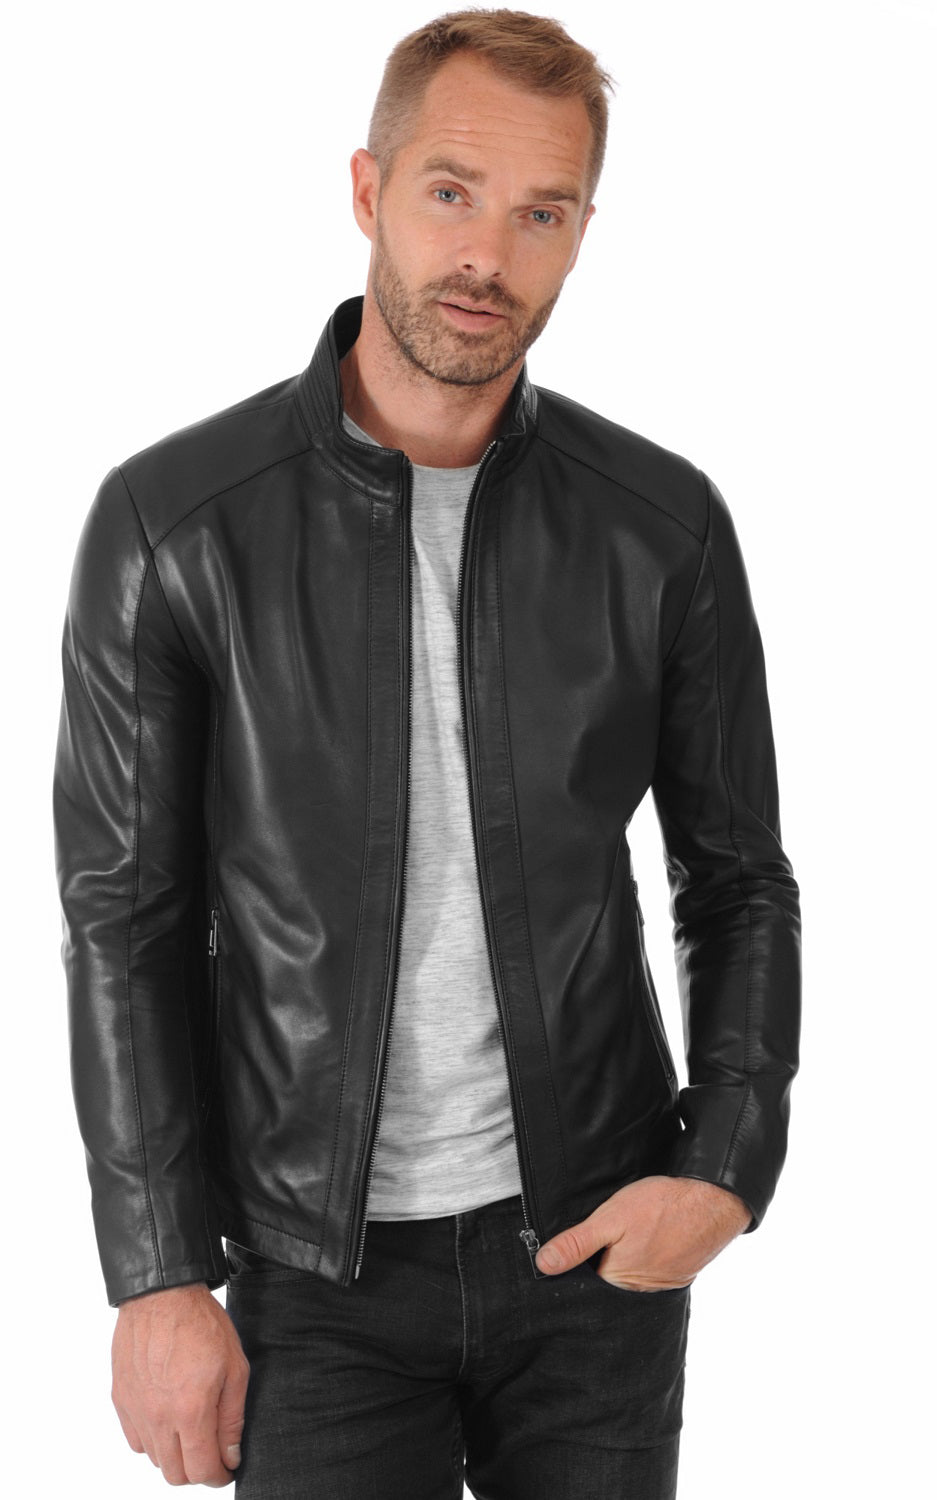 Men Genuine Leather Jacket MJ 98 SkinOutfit